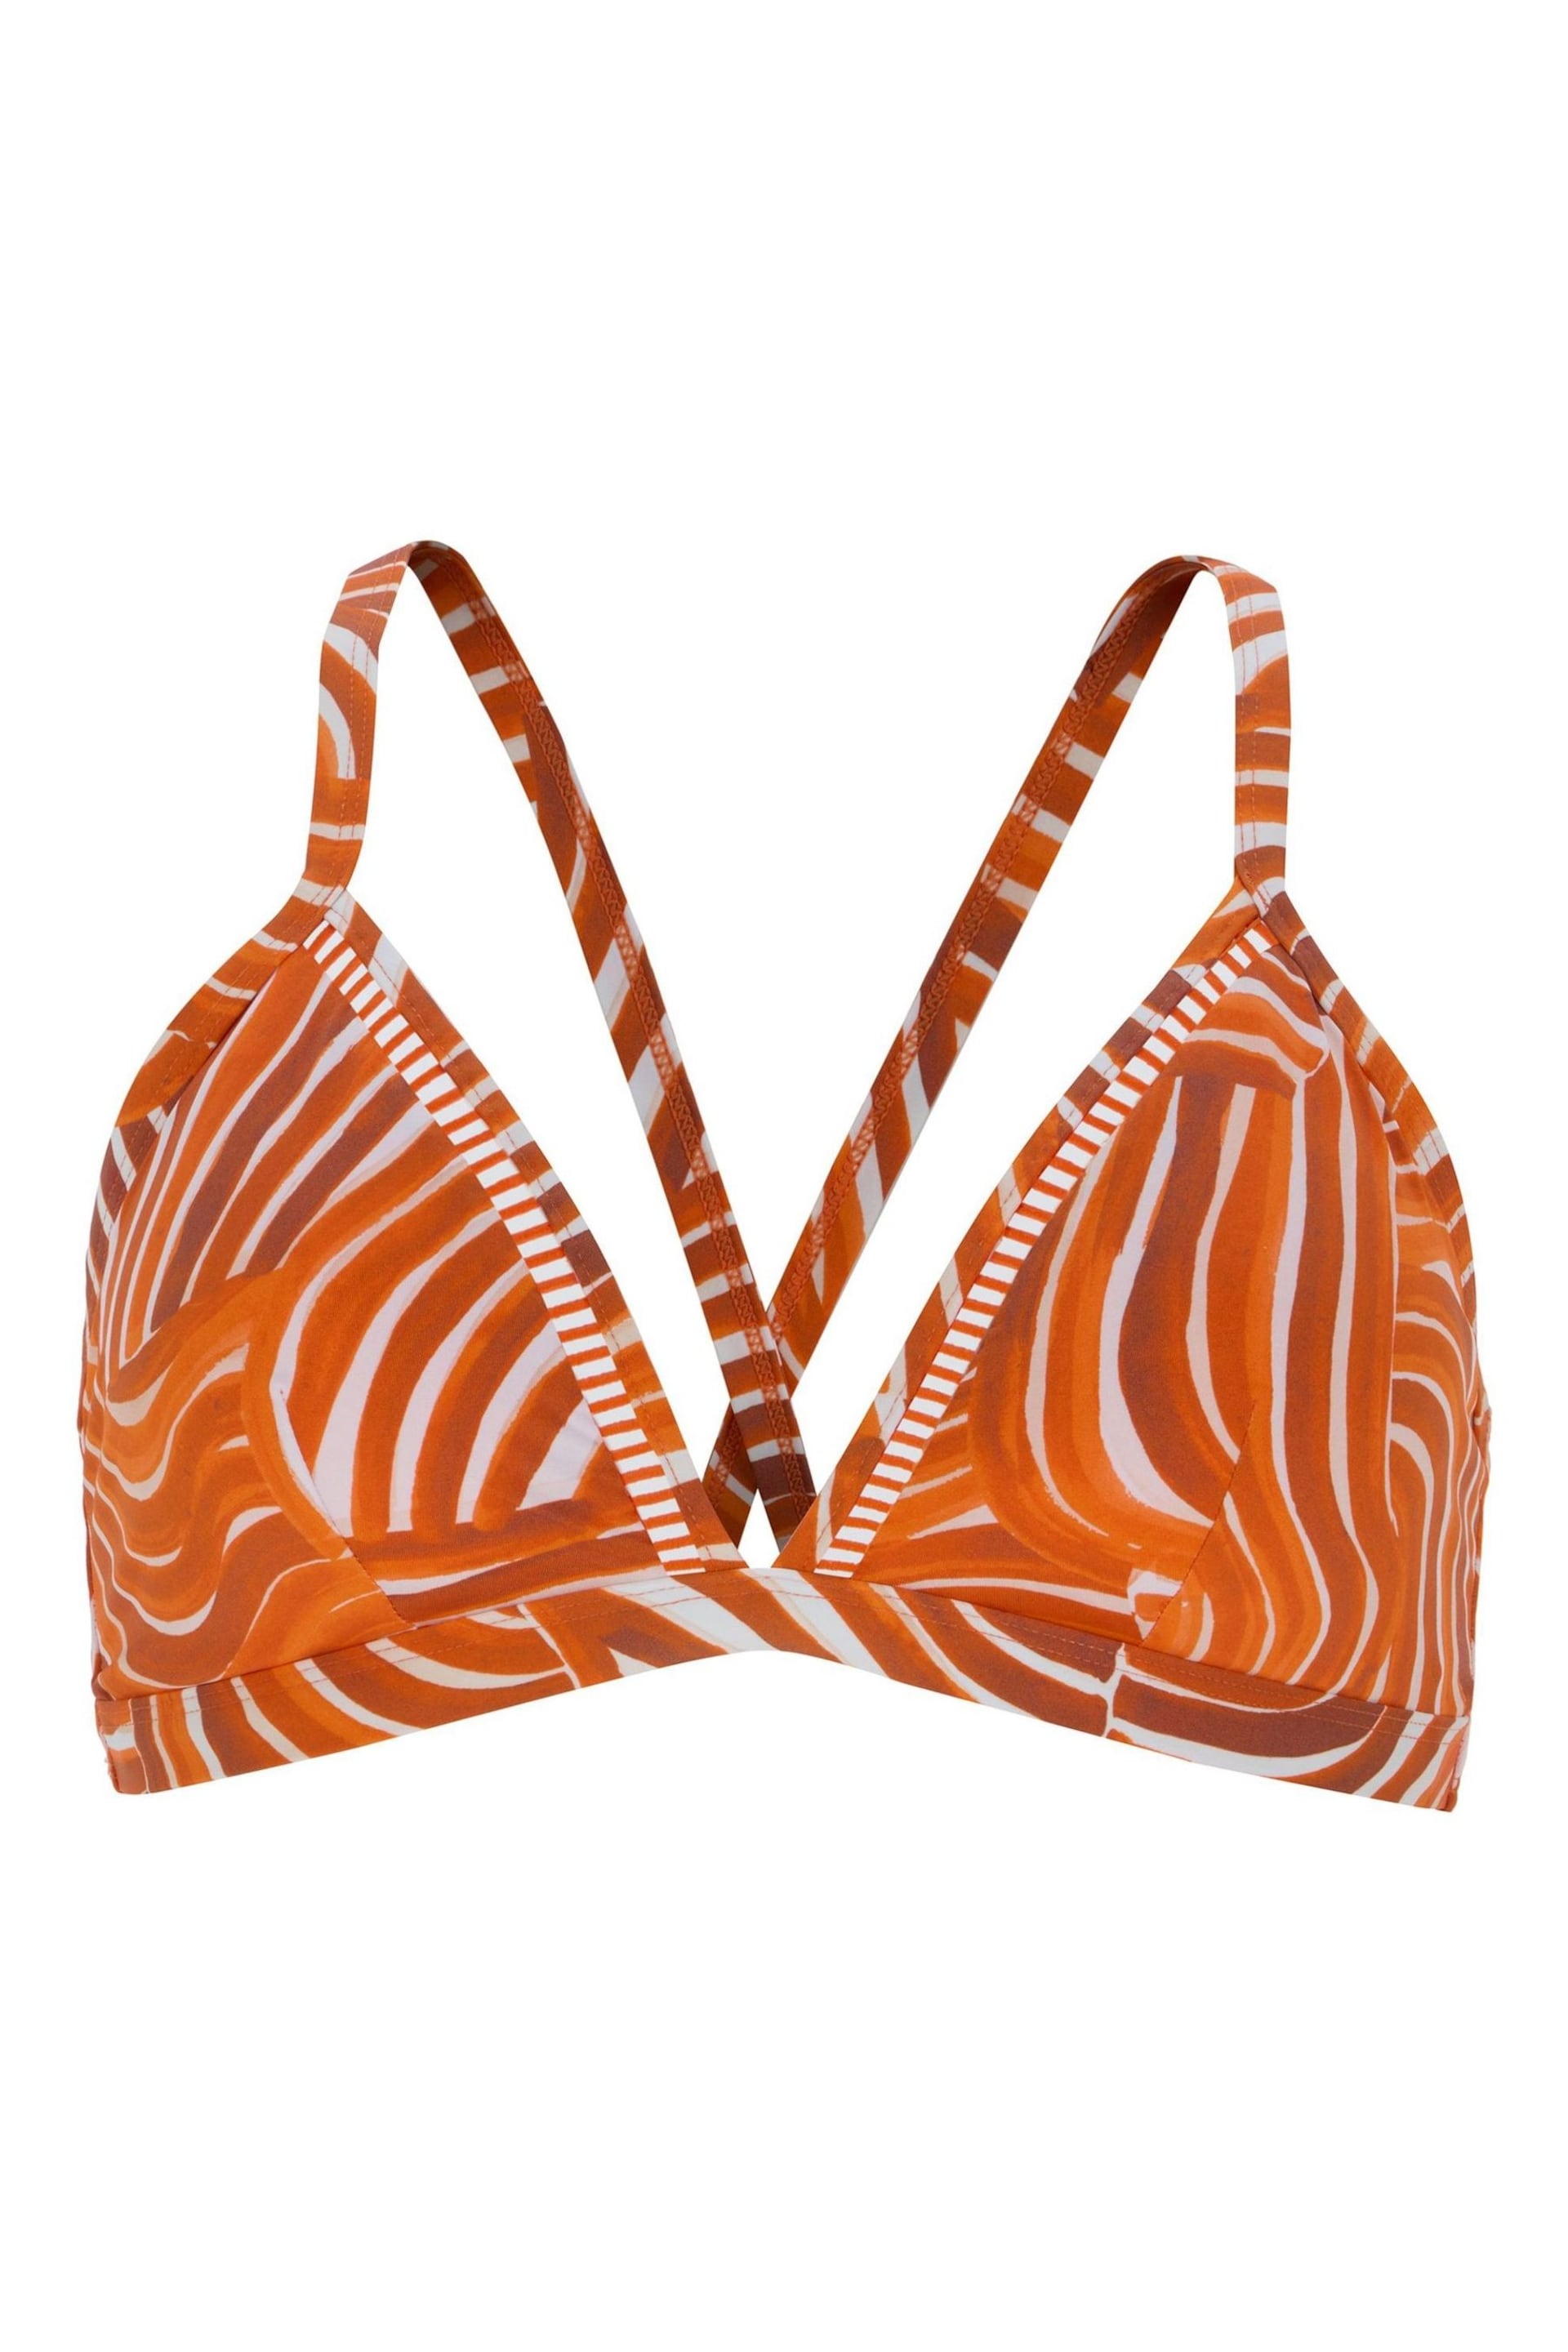 Mint Velvet Orange Swirl Rikrak Triangle Bikini Top - Image 4 of 5